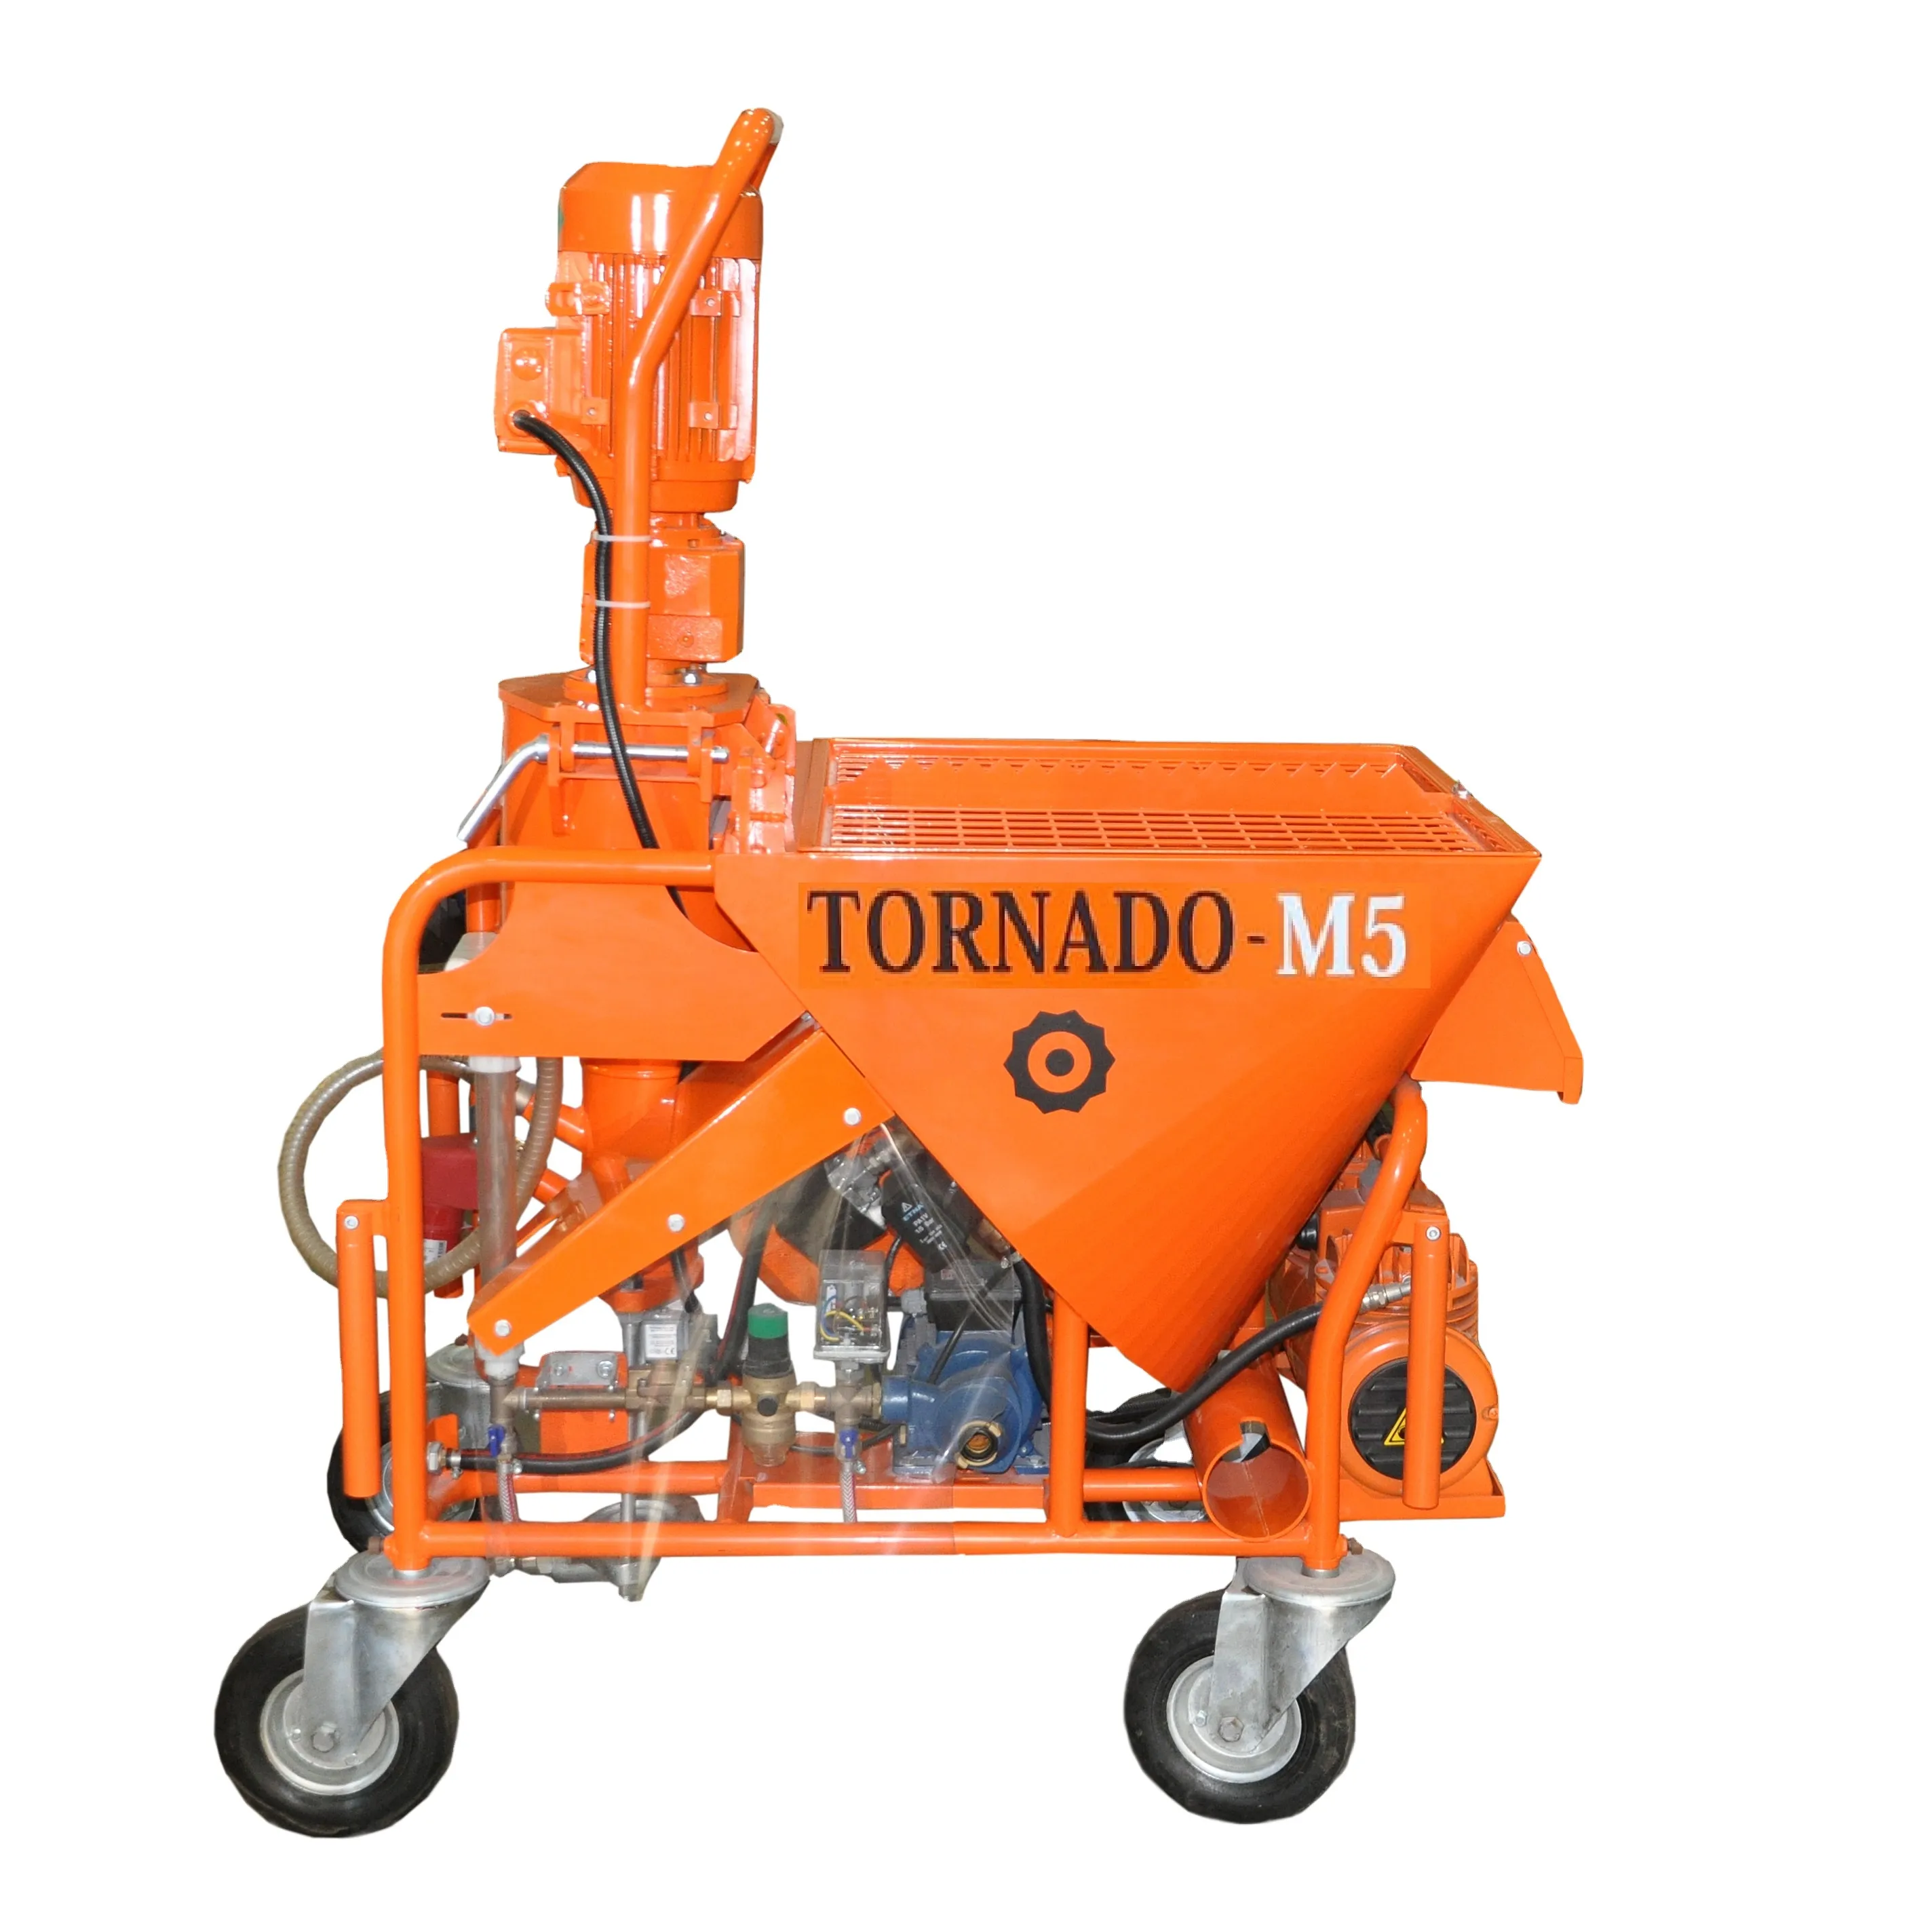 High Quality Wall Dry Mortar Cement Plastering Spraying Machine Made in Turkey New 380 V Power Tornado M5